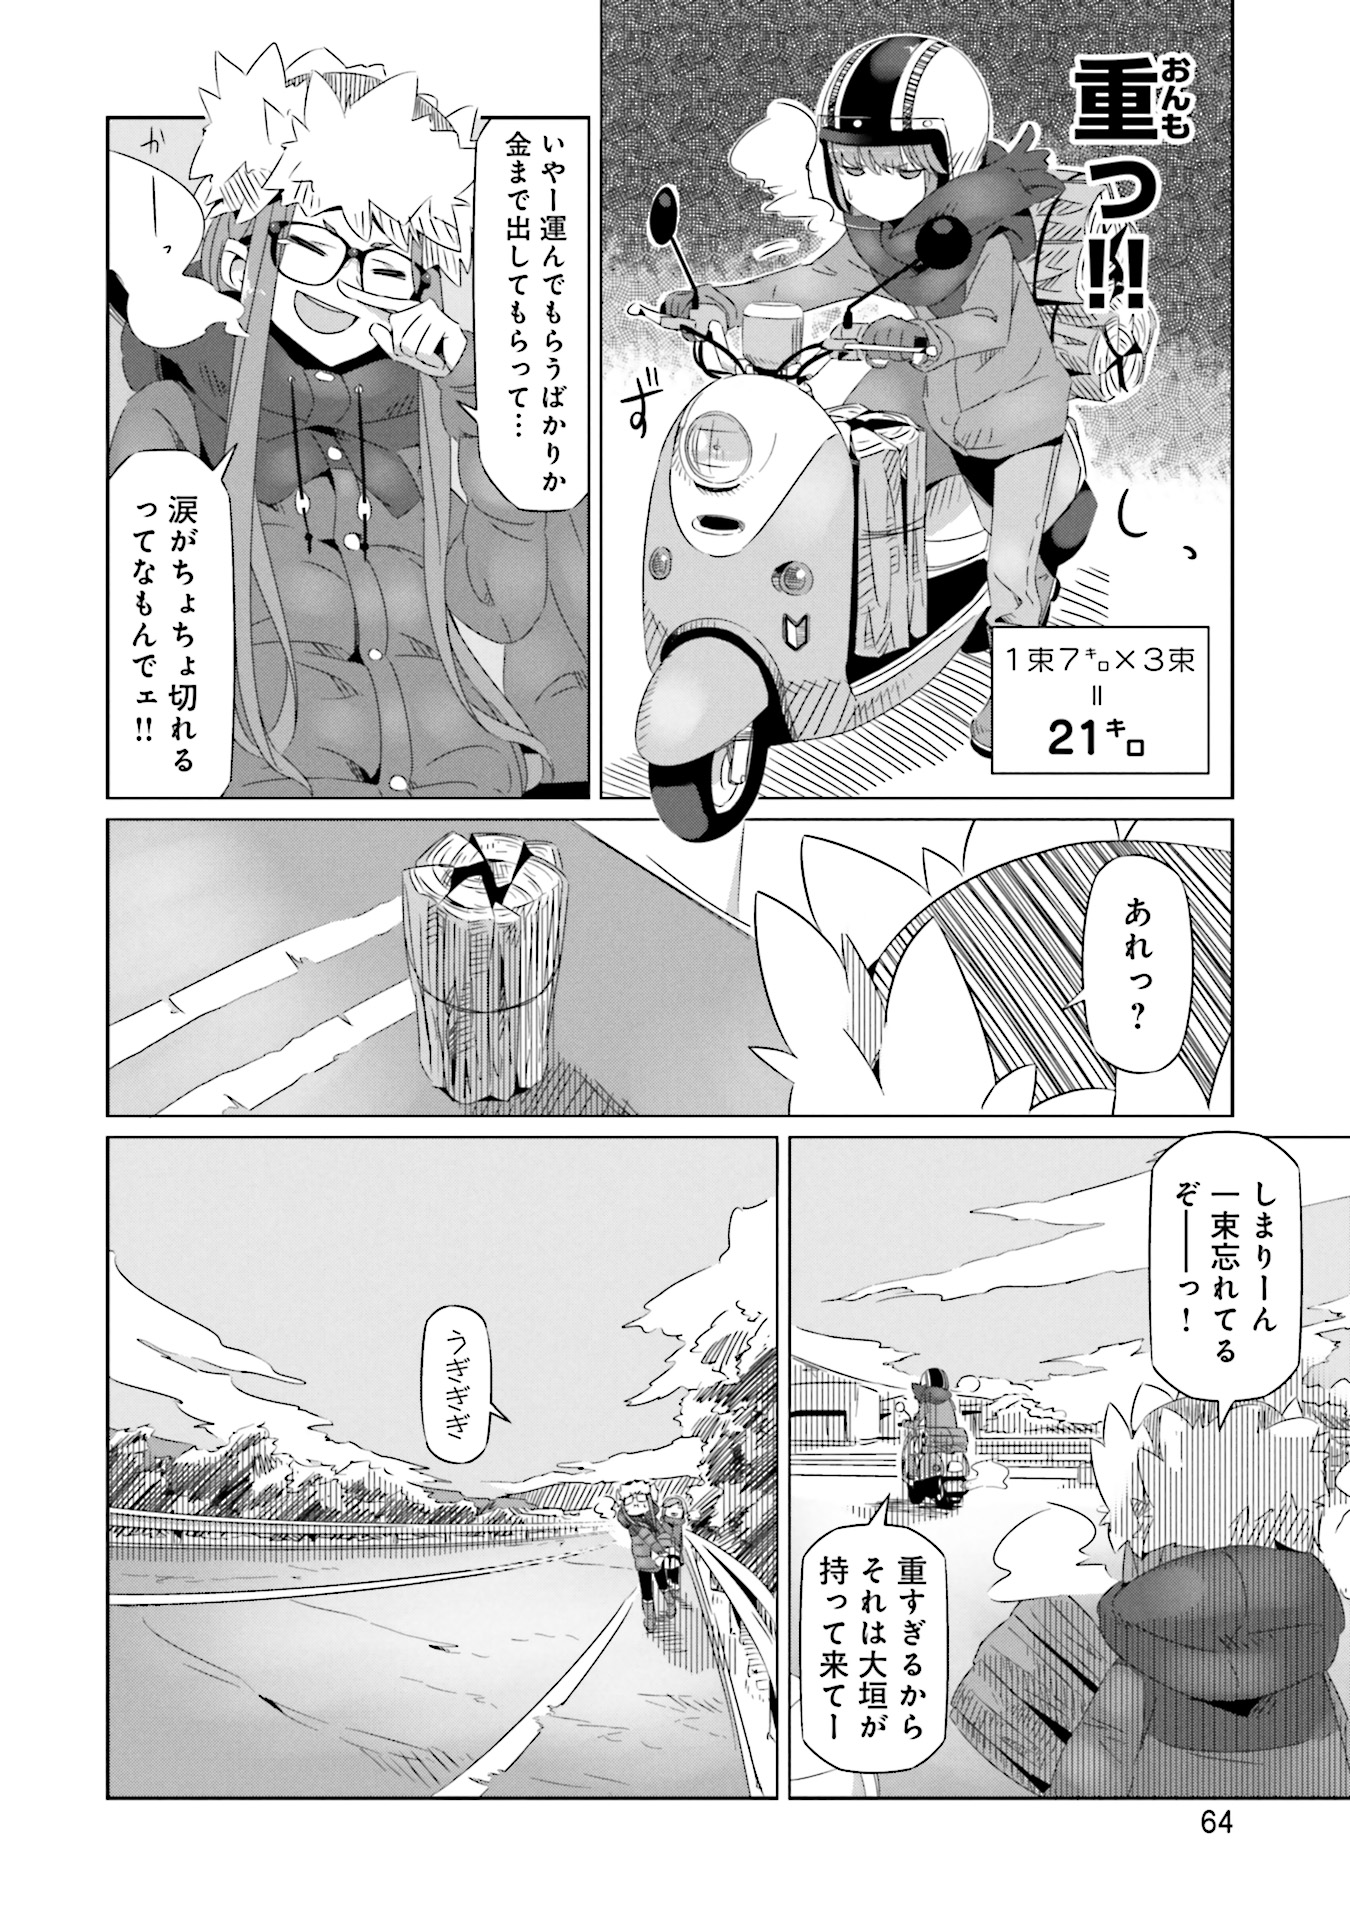 Yuru Camp - Chapter 21 - Page 2